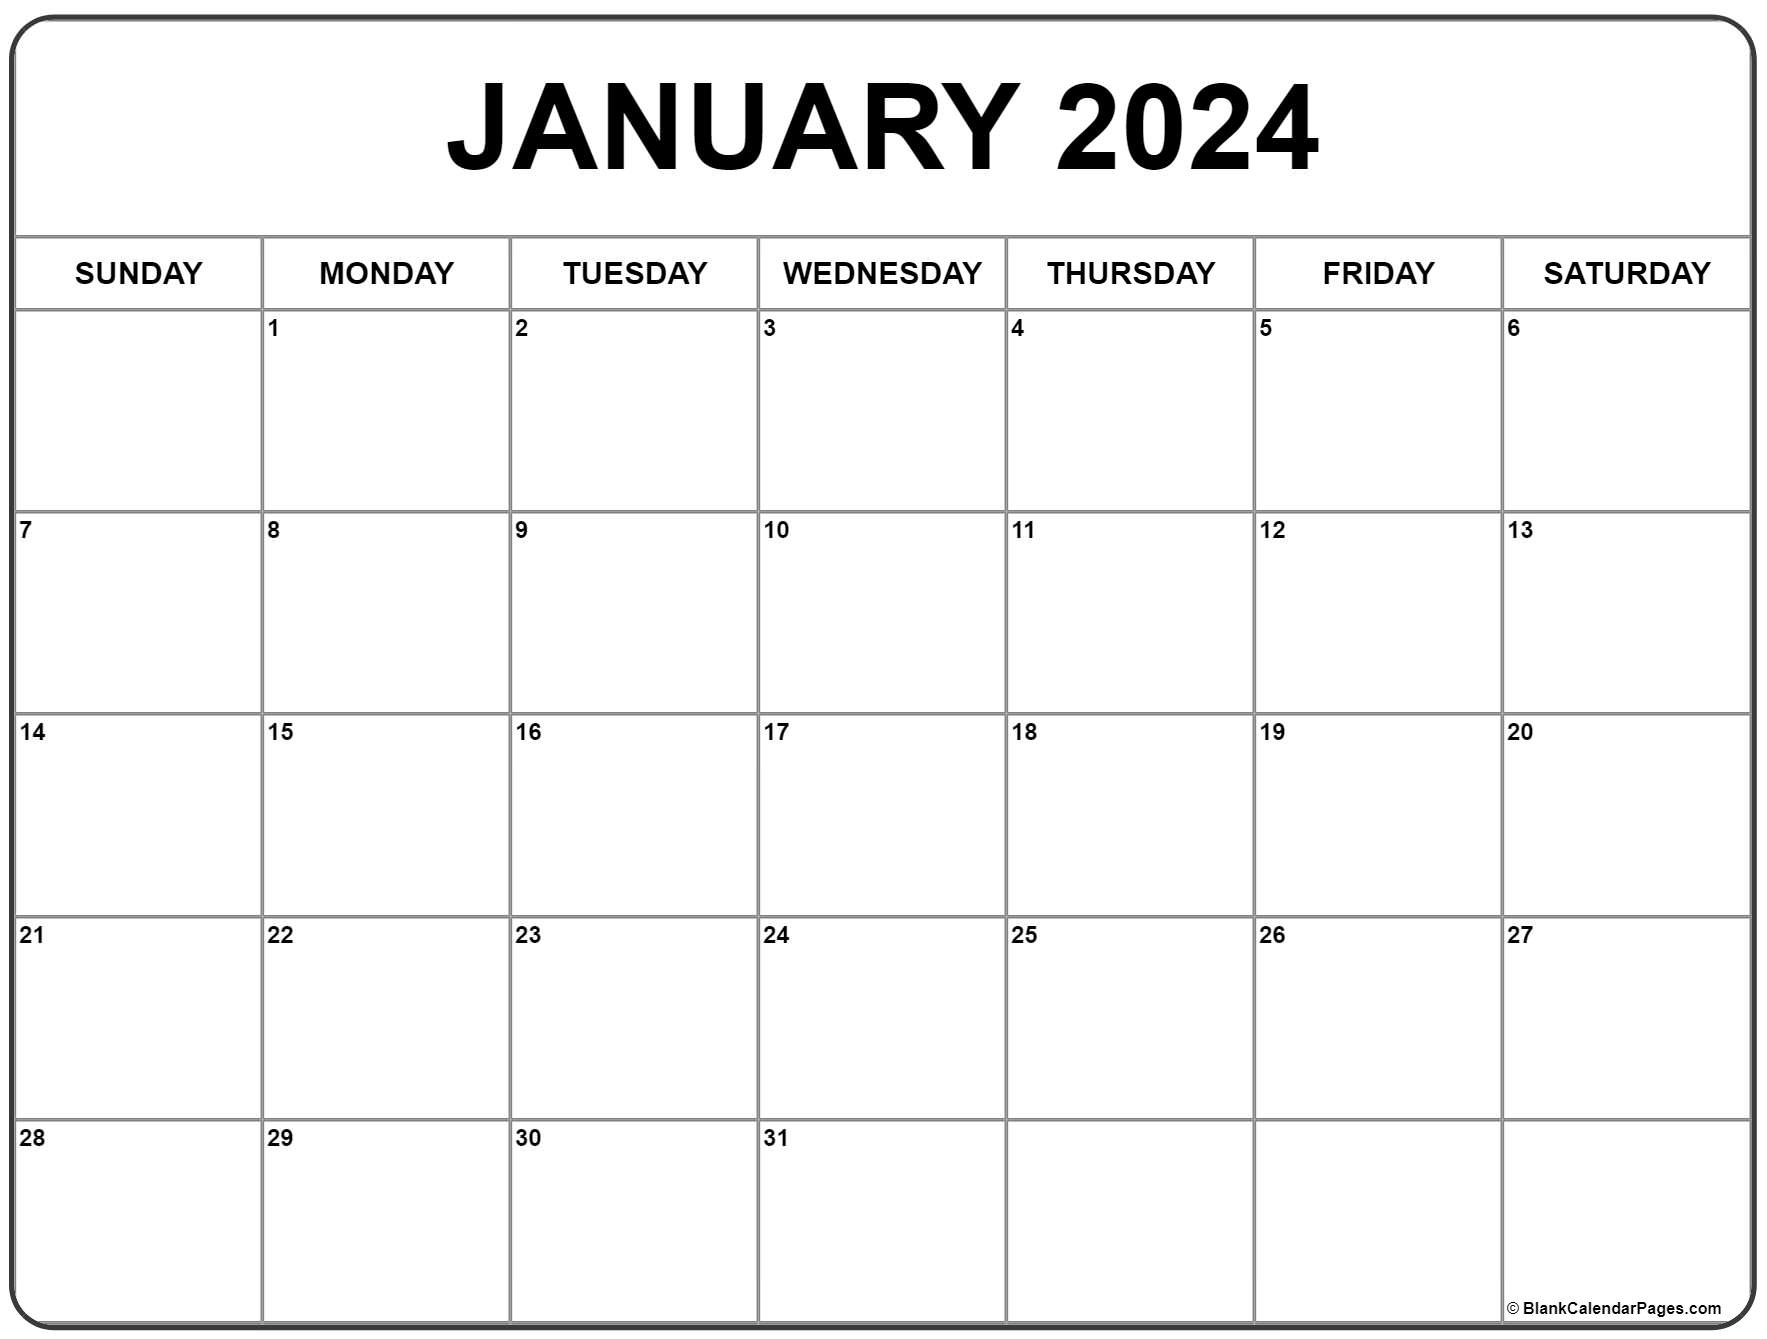 January 2024 Calendar | Free Printable Calendar for Monthly Printable Calendar 2024